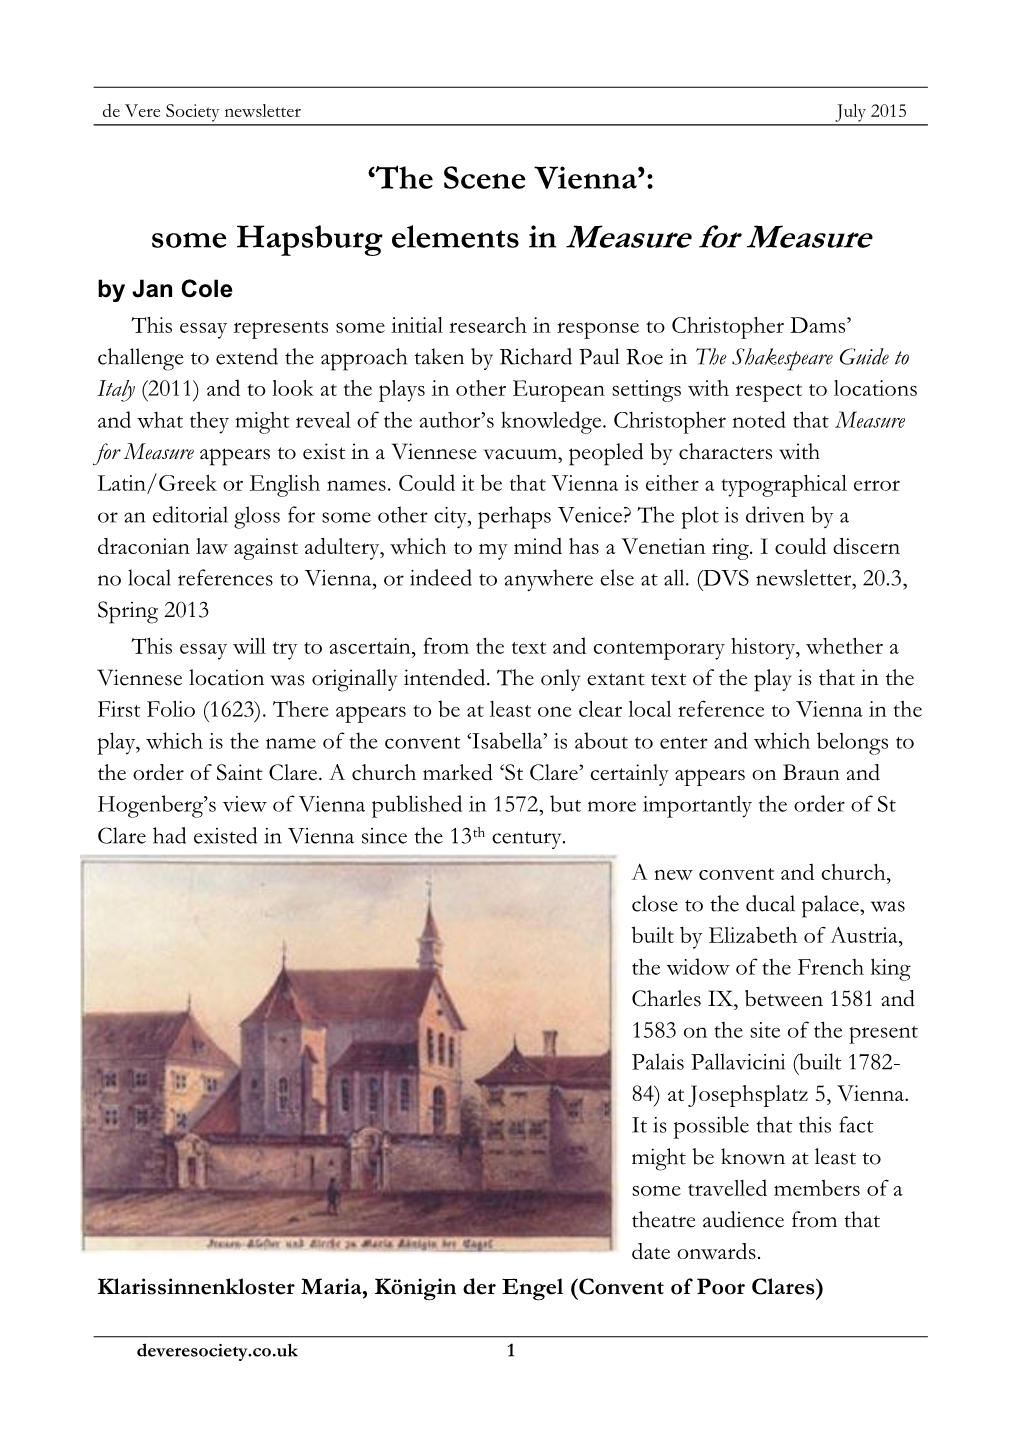 'The Scene Vienna': Some Hapsburg Elements in Measure for Measure